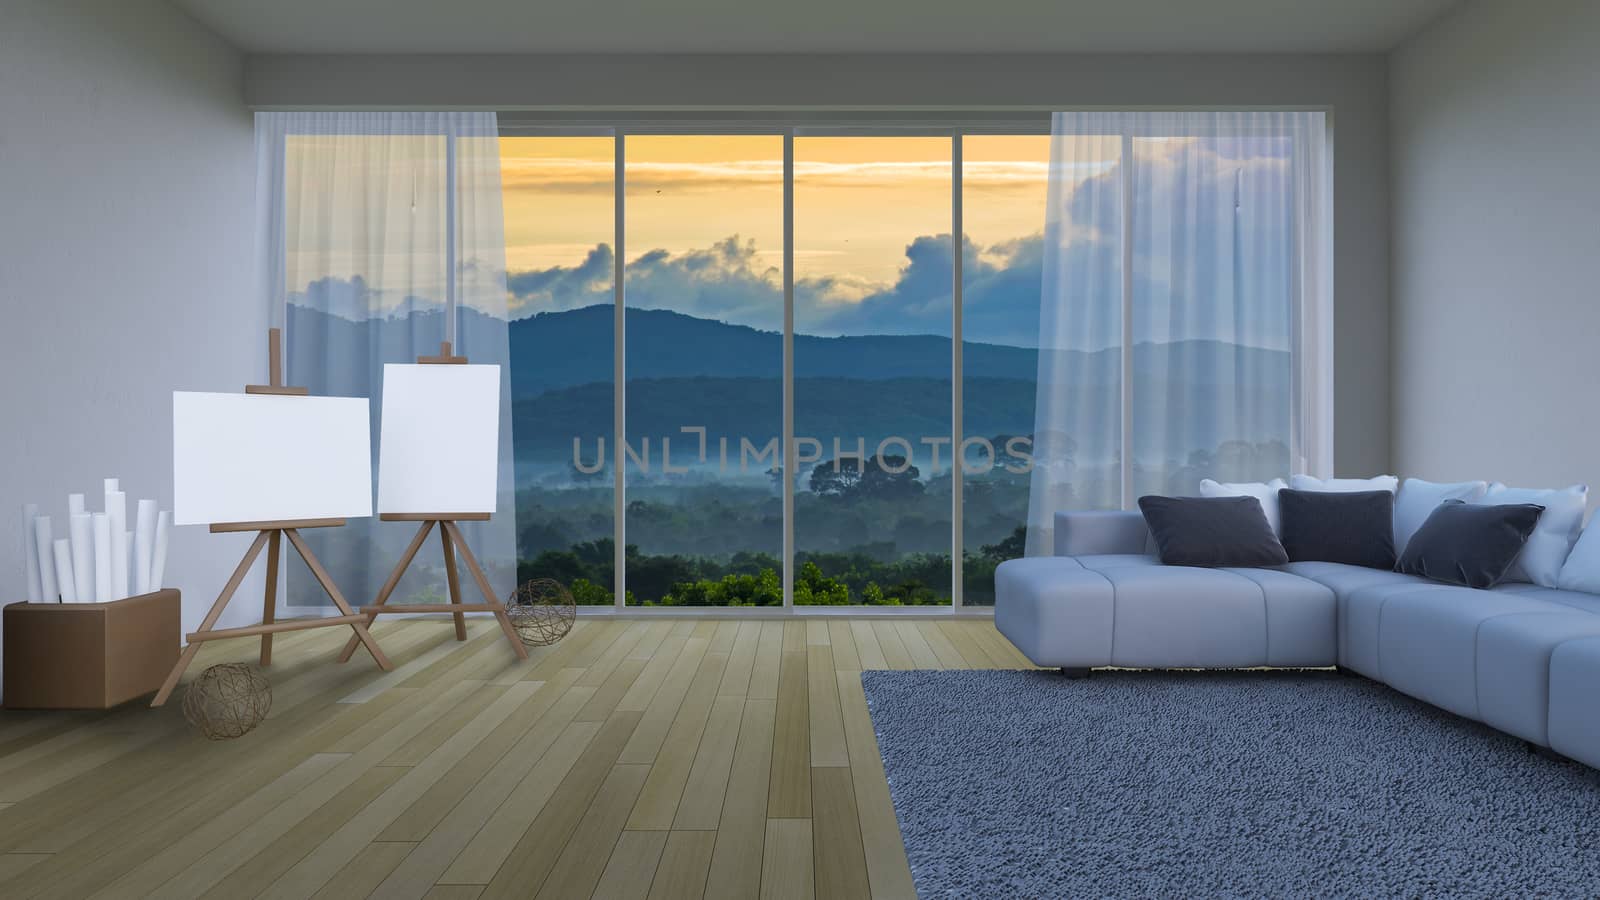 3ds rendering interior living room